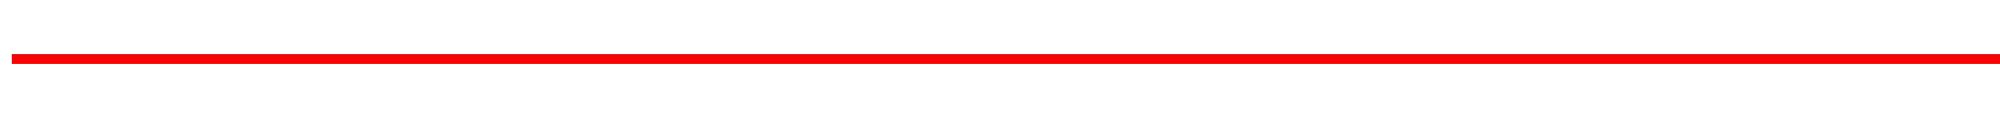 Red Line Separator